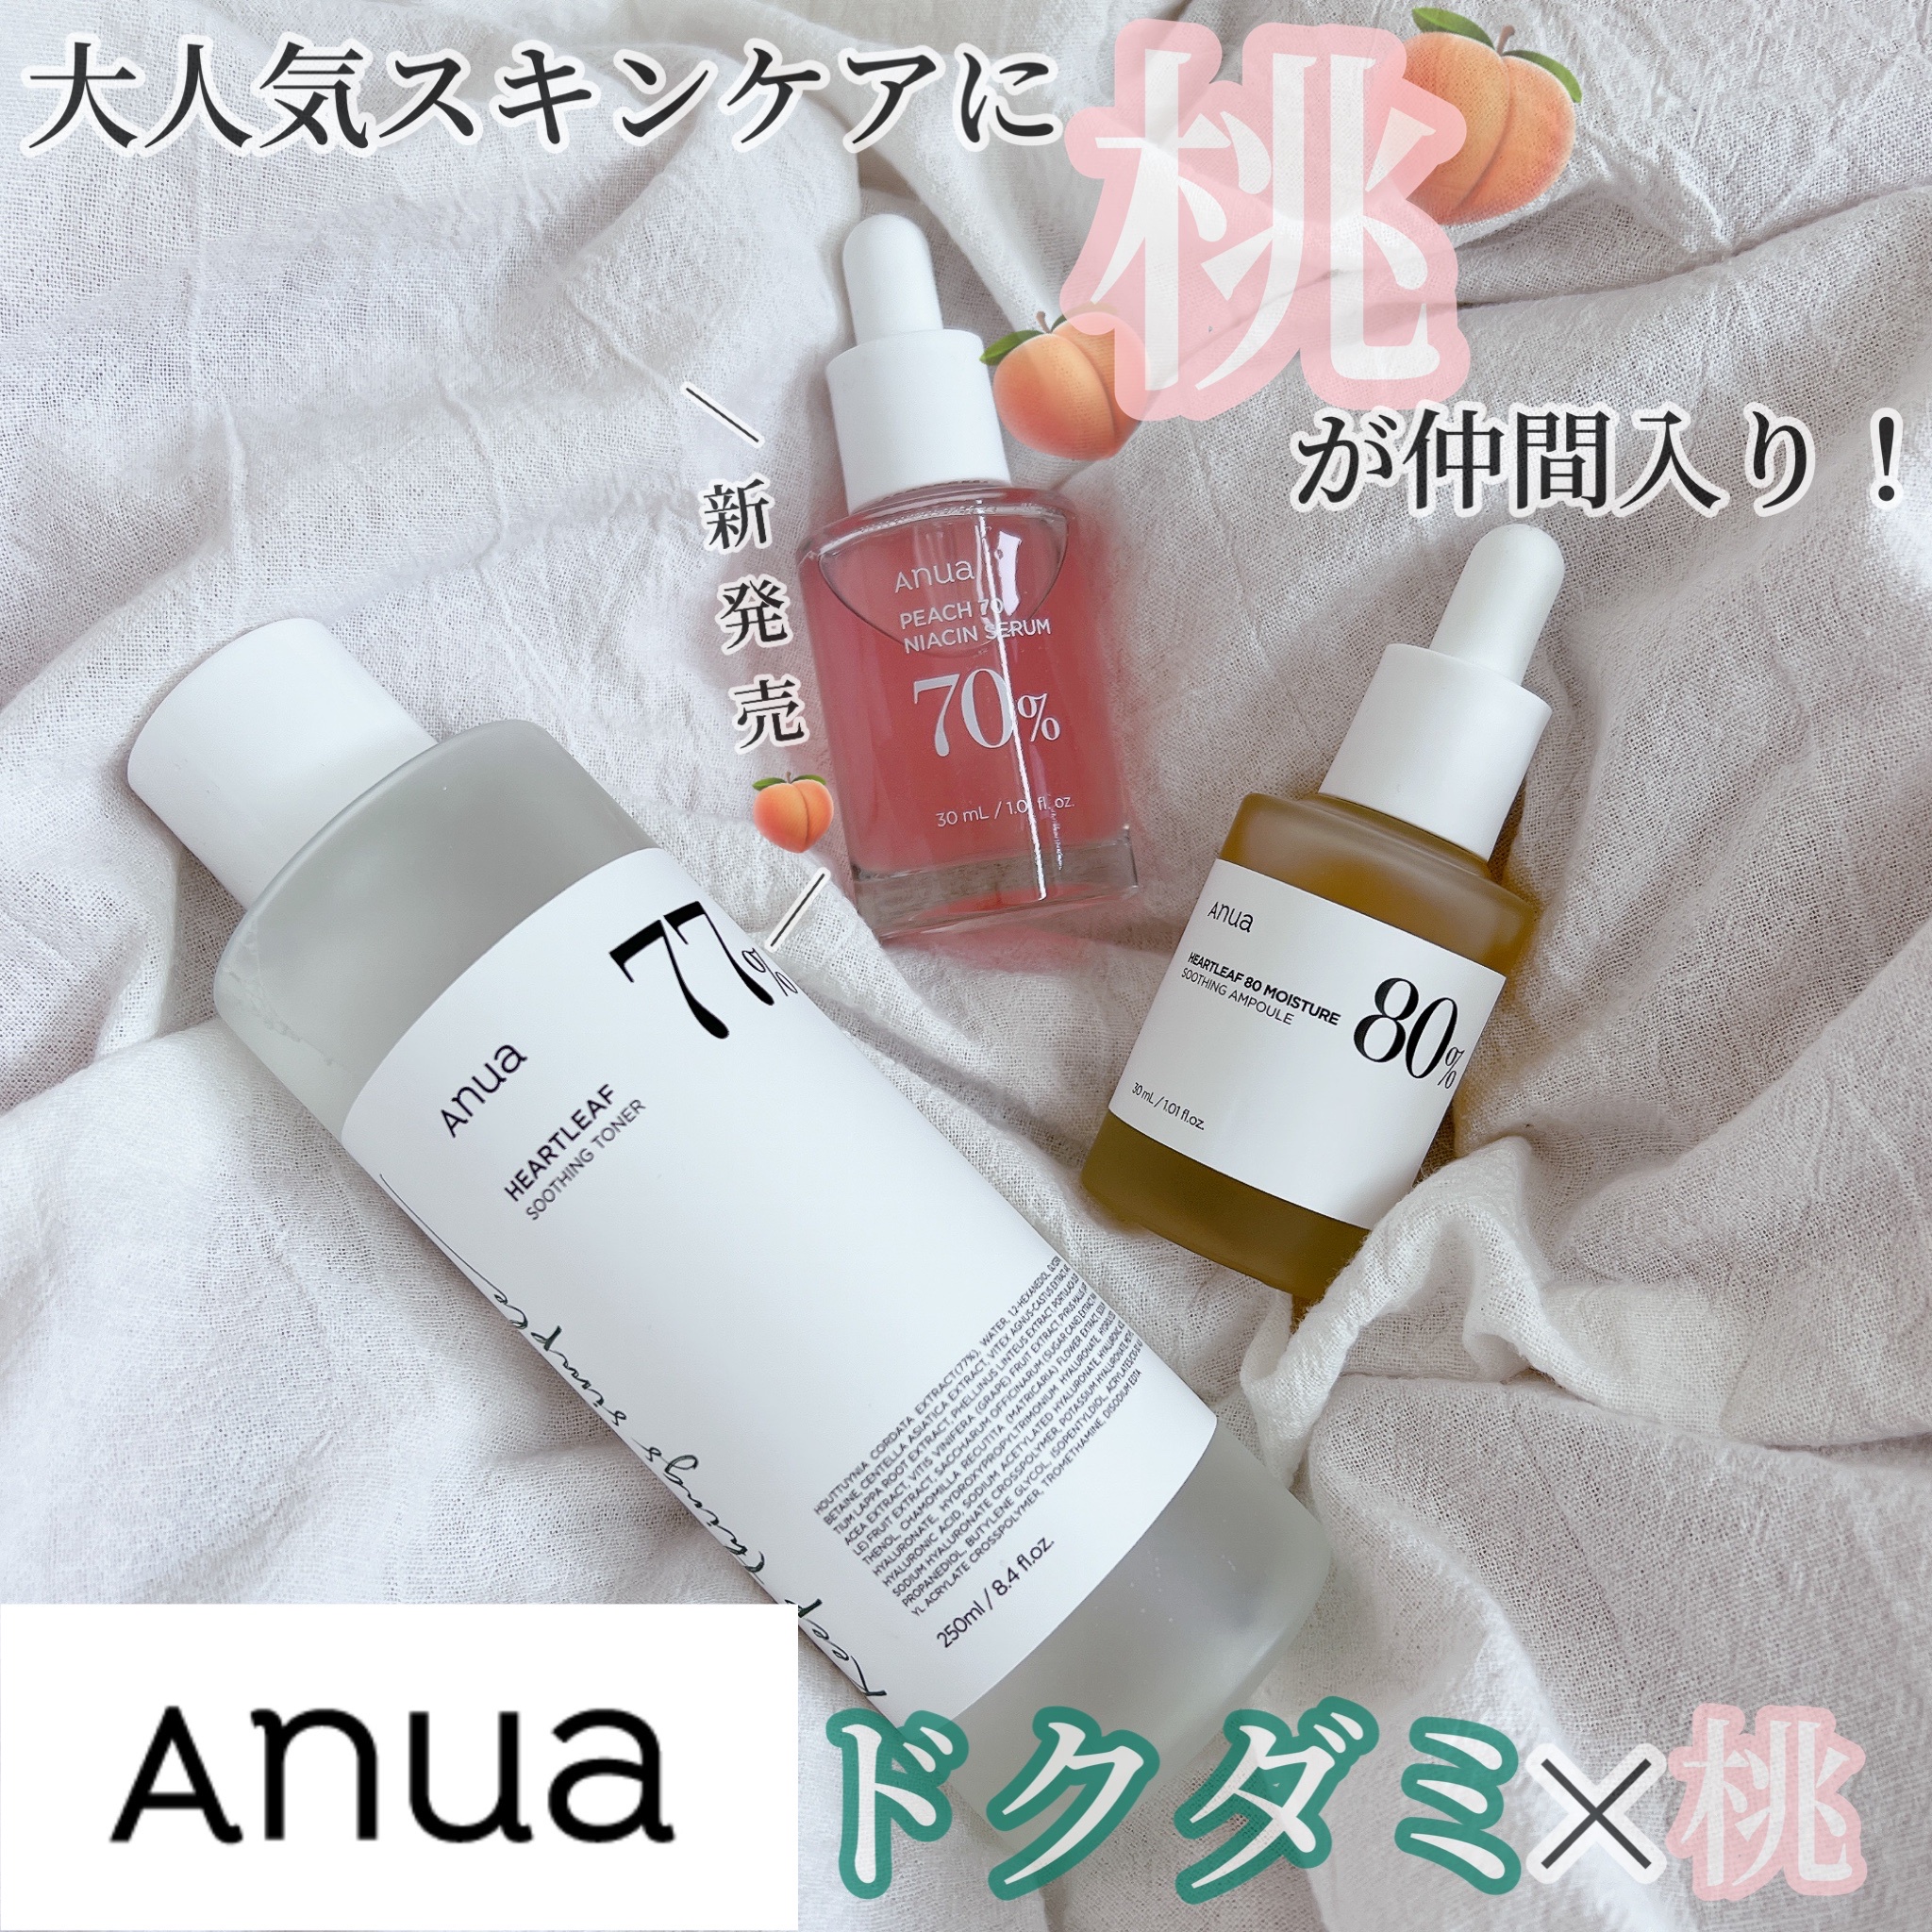 Anua ドクダミ77%スージングトナー桃70%ナイアシンセラム 基礎化粧品